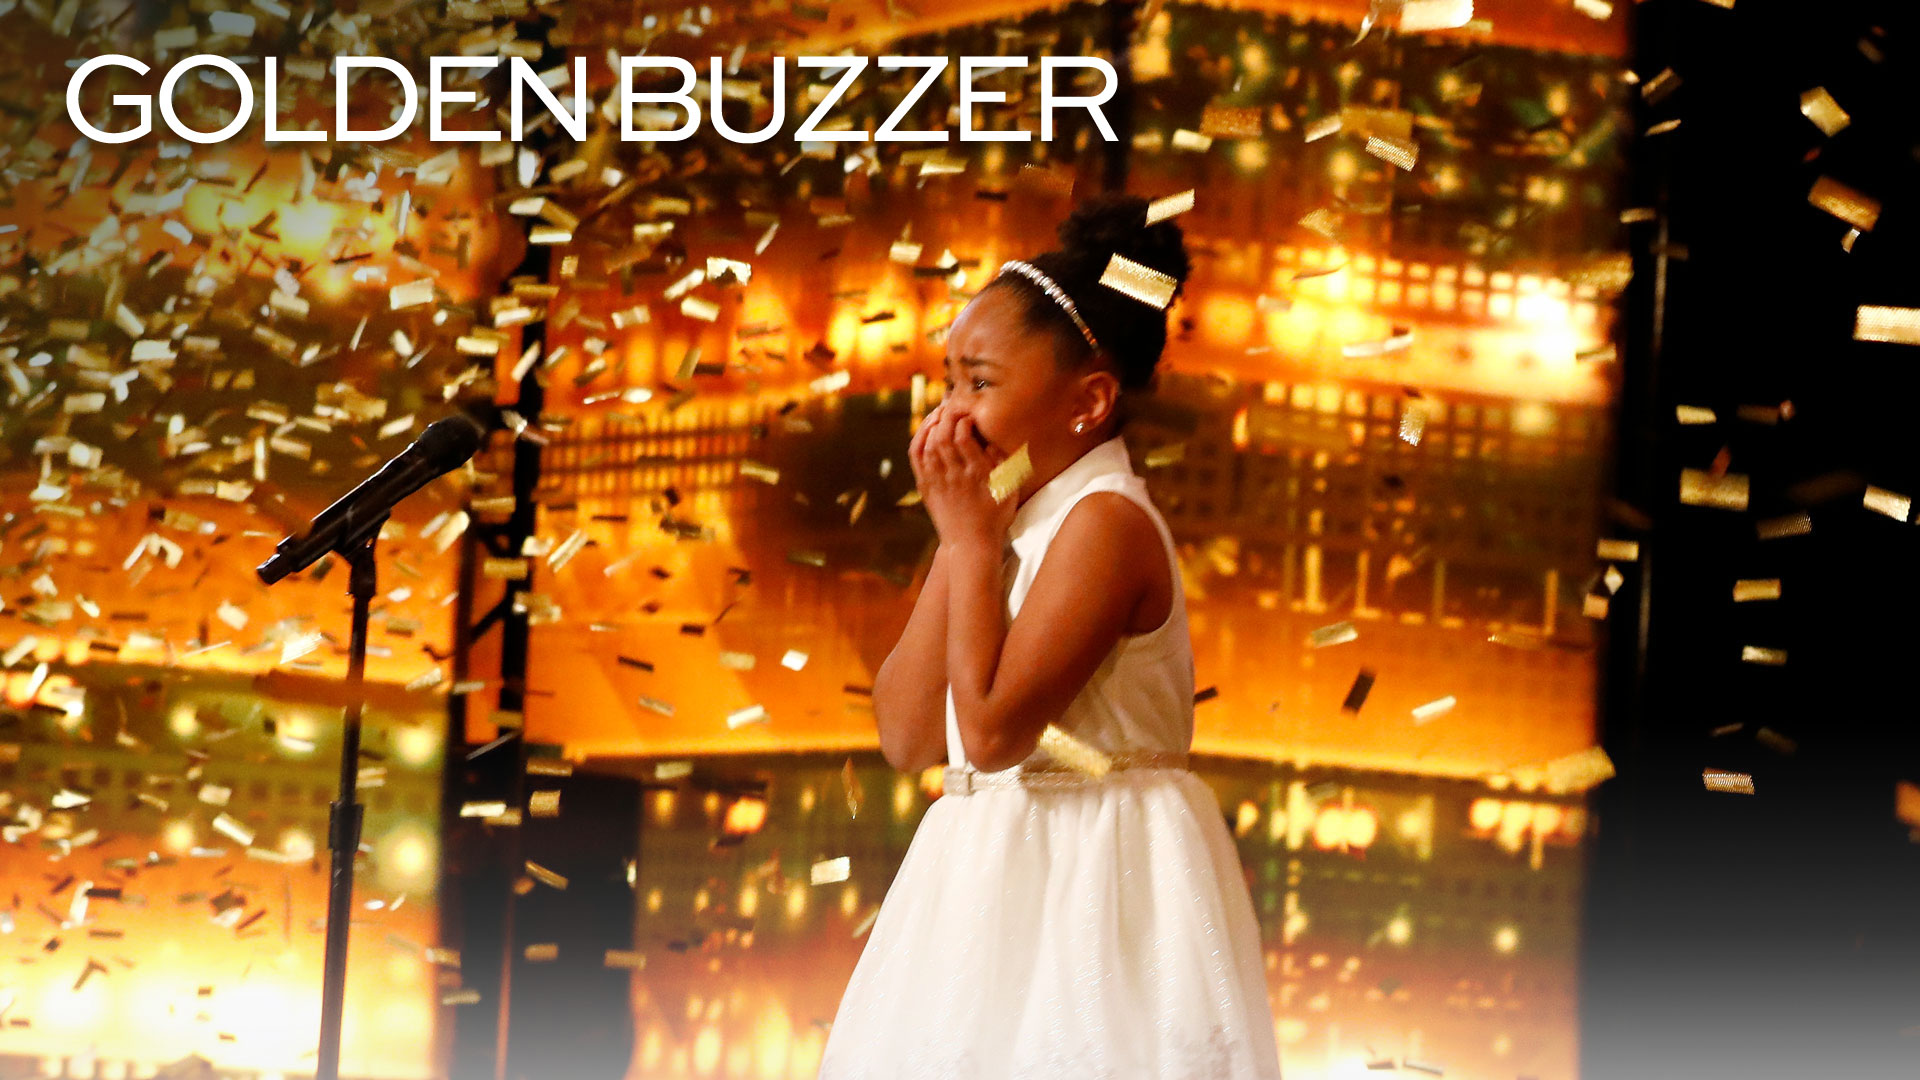 Watch America's Got Talent Highlight Golden Buzzer 9YearOld Victory